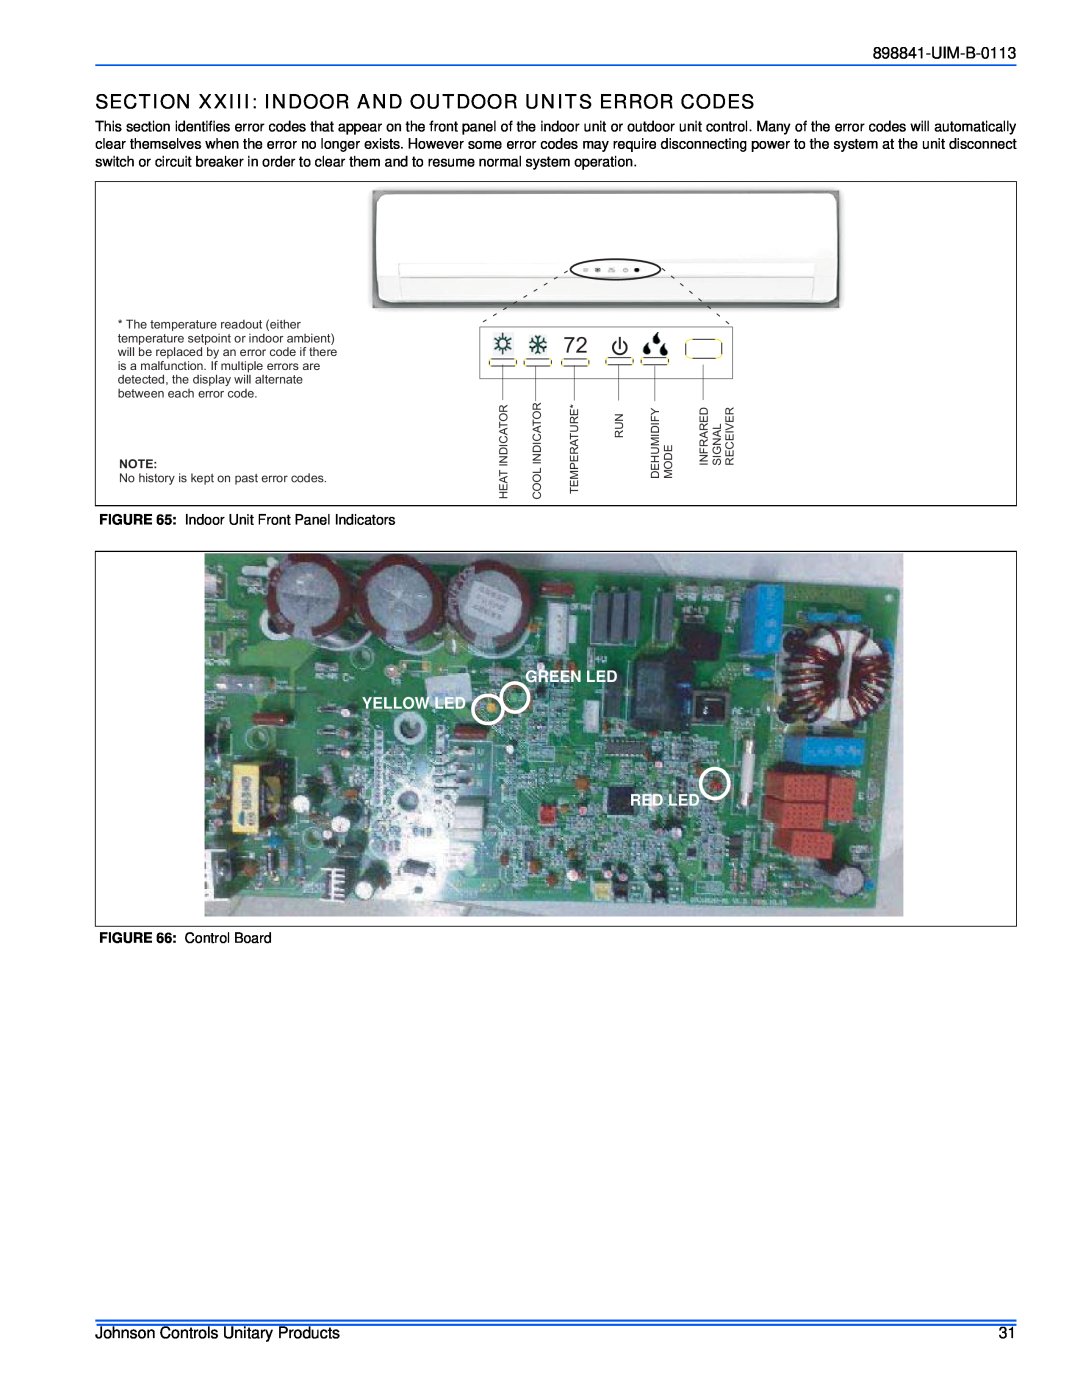 Johnson Controls 22 SEER installation manual UIM-B-0113, Green Led Yellow Led Red Led, Johnson Controls Unitary Products 